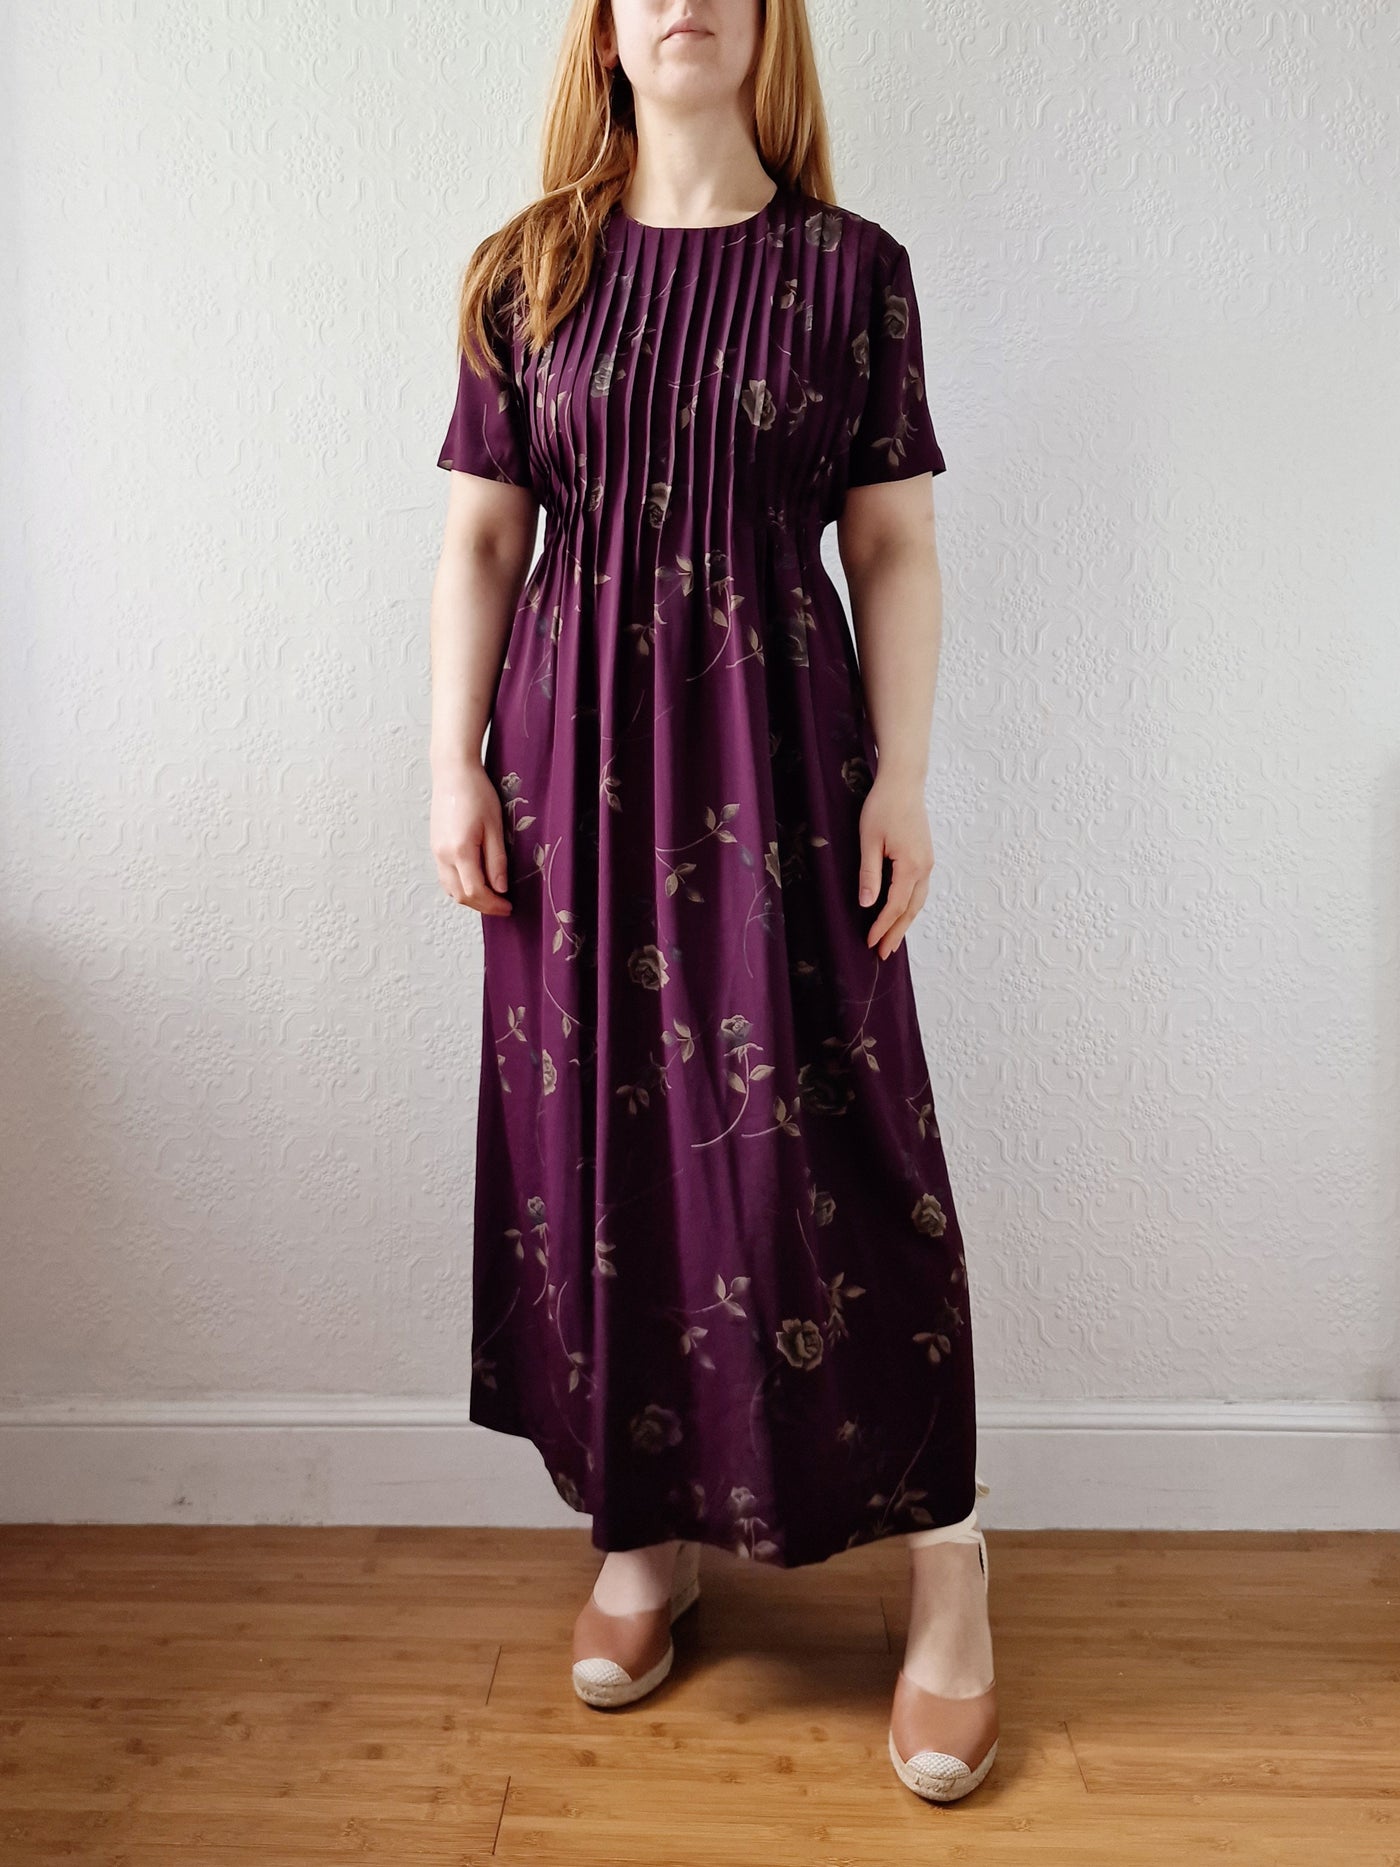 Vintage 90s Deep Purple Floral Midi Dress with Short Sleeves - S/M